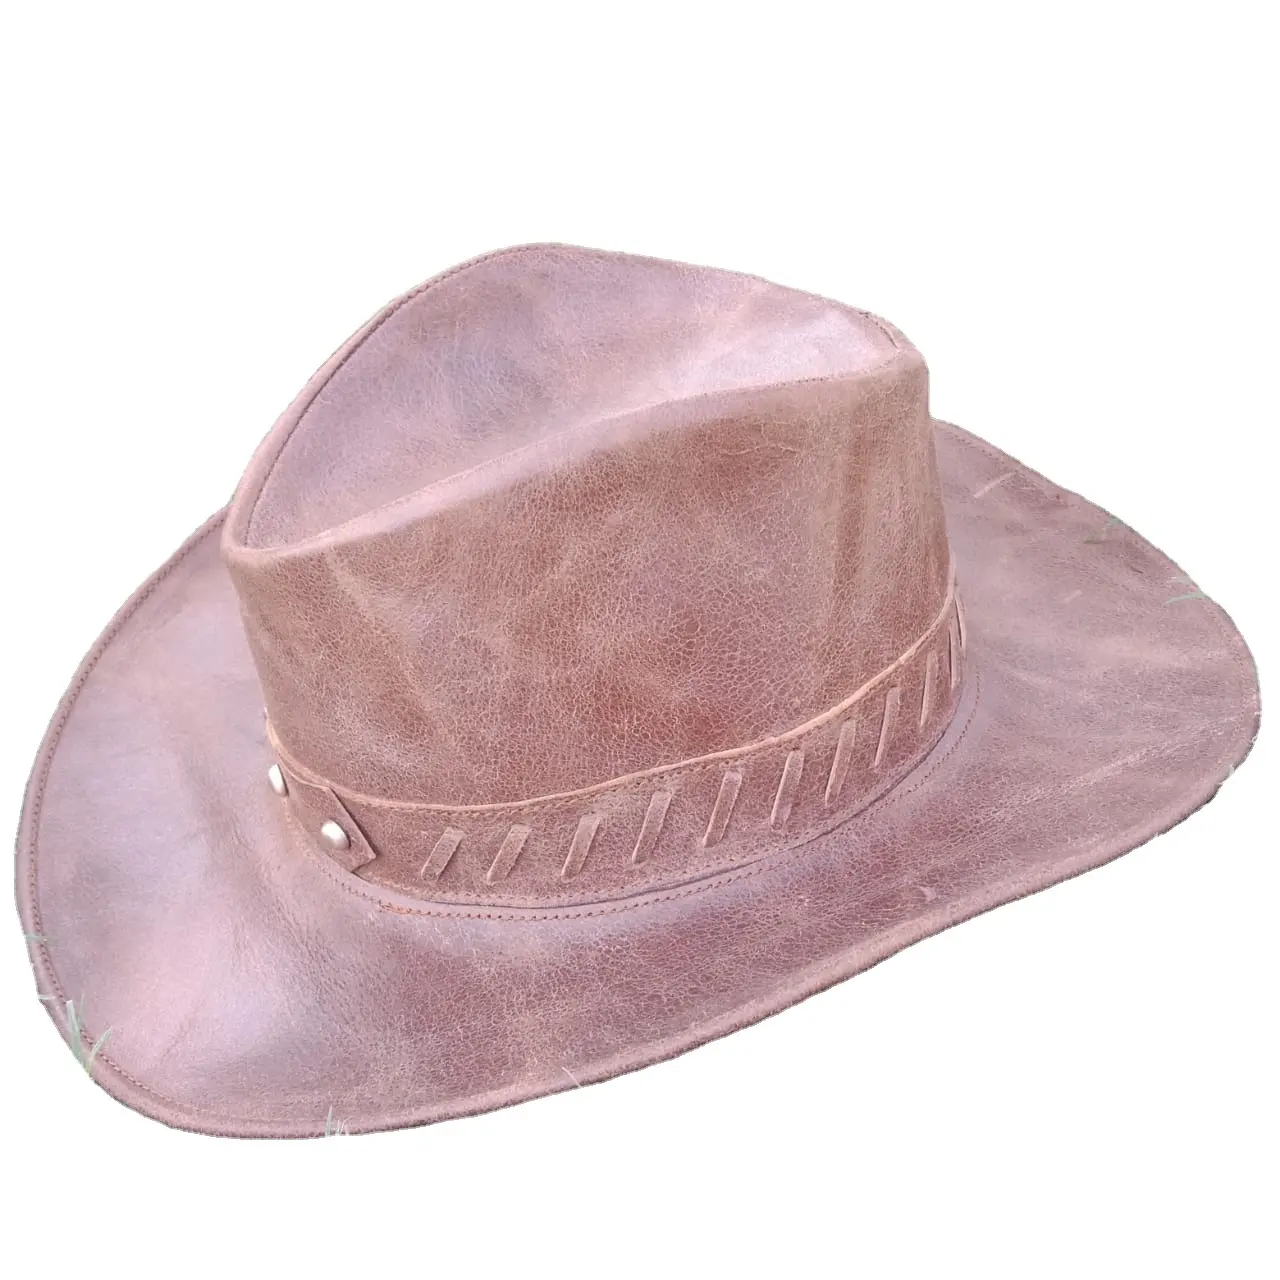 Vintage Cowboy Leather Hats Pinched Cattleman Brick Gus Gambler Hats Unique Stylish Genuine Leather Open Crown Brown Unisex ALH1